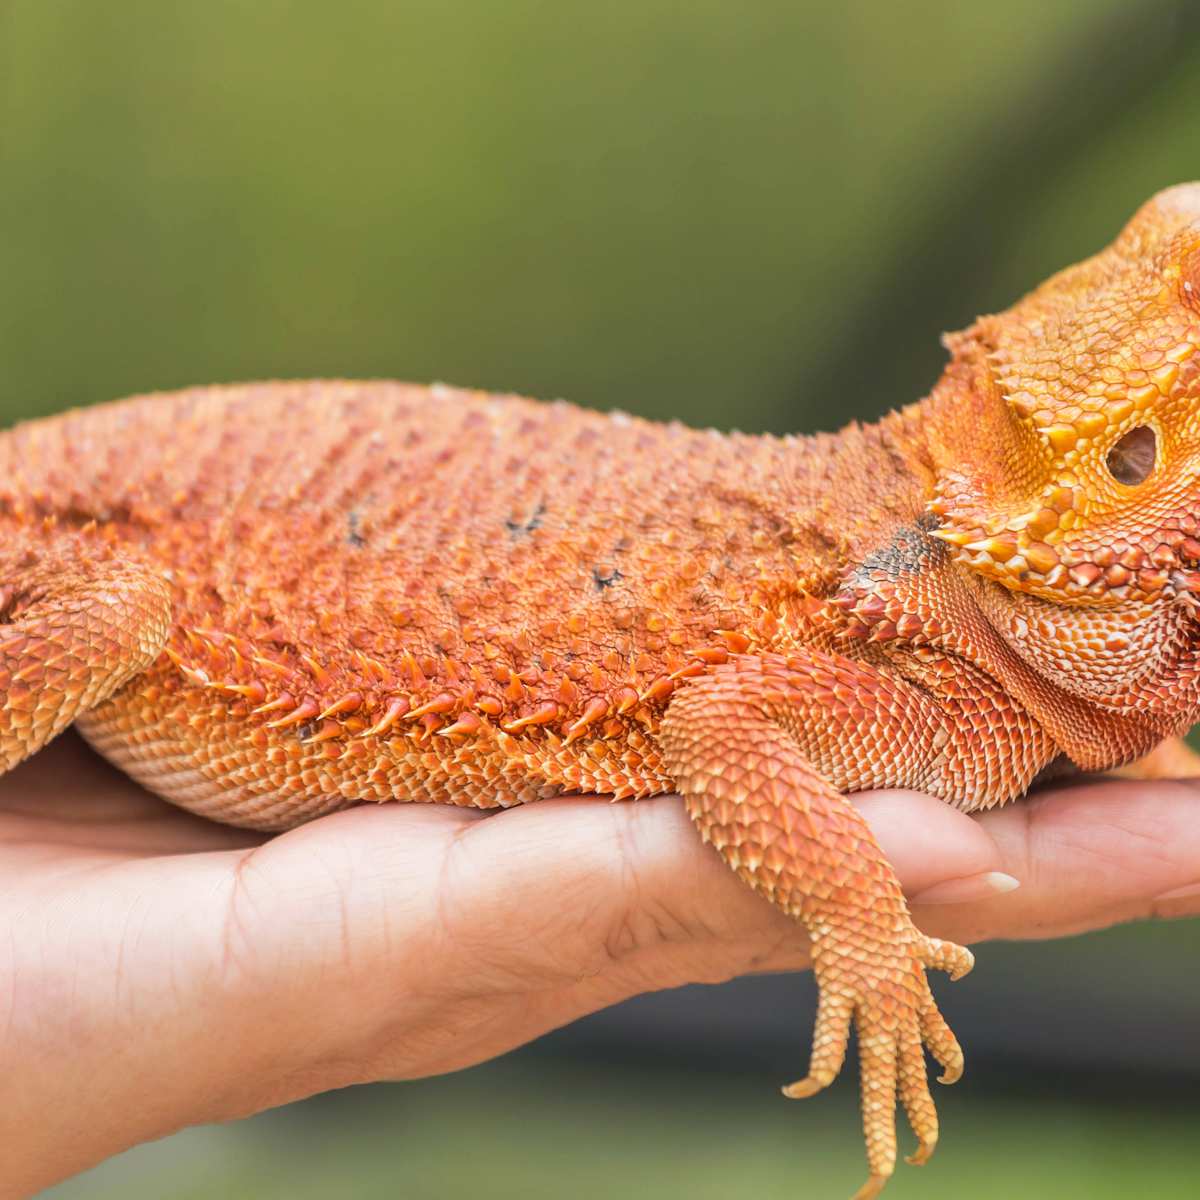 red bearded dragon lizard